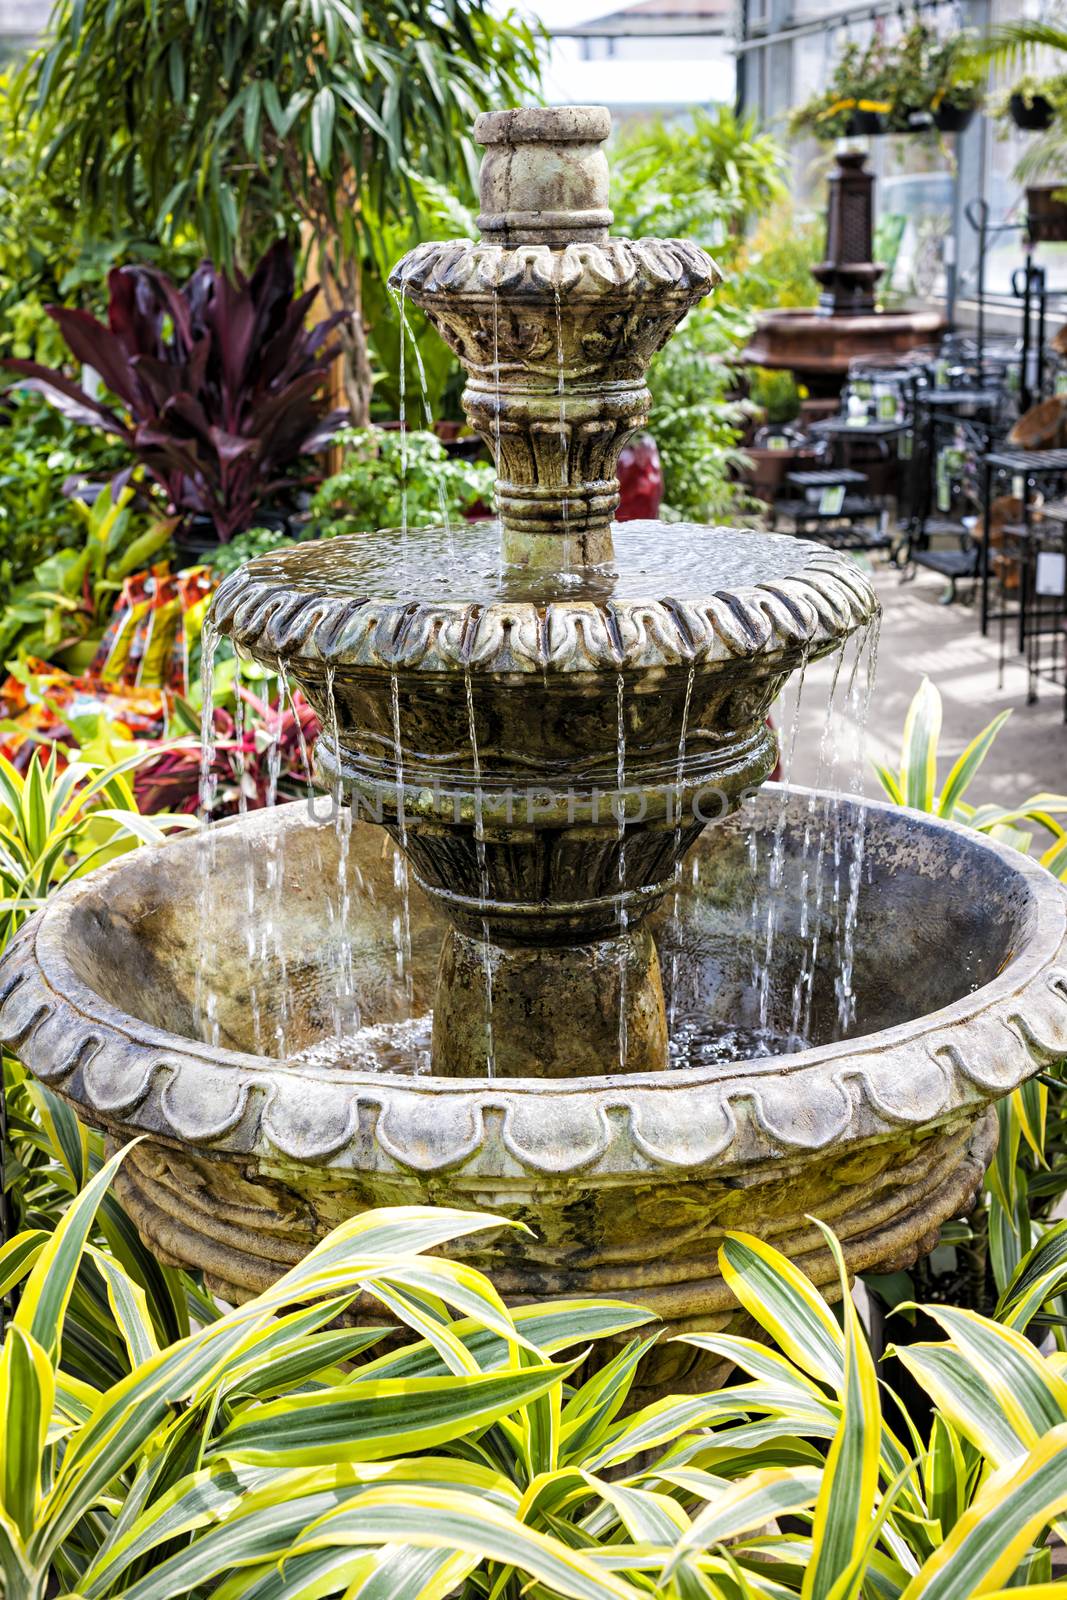 Concrete fountain in garden center by elenathewise